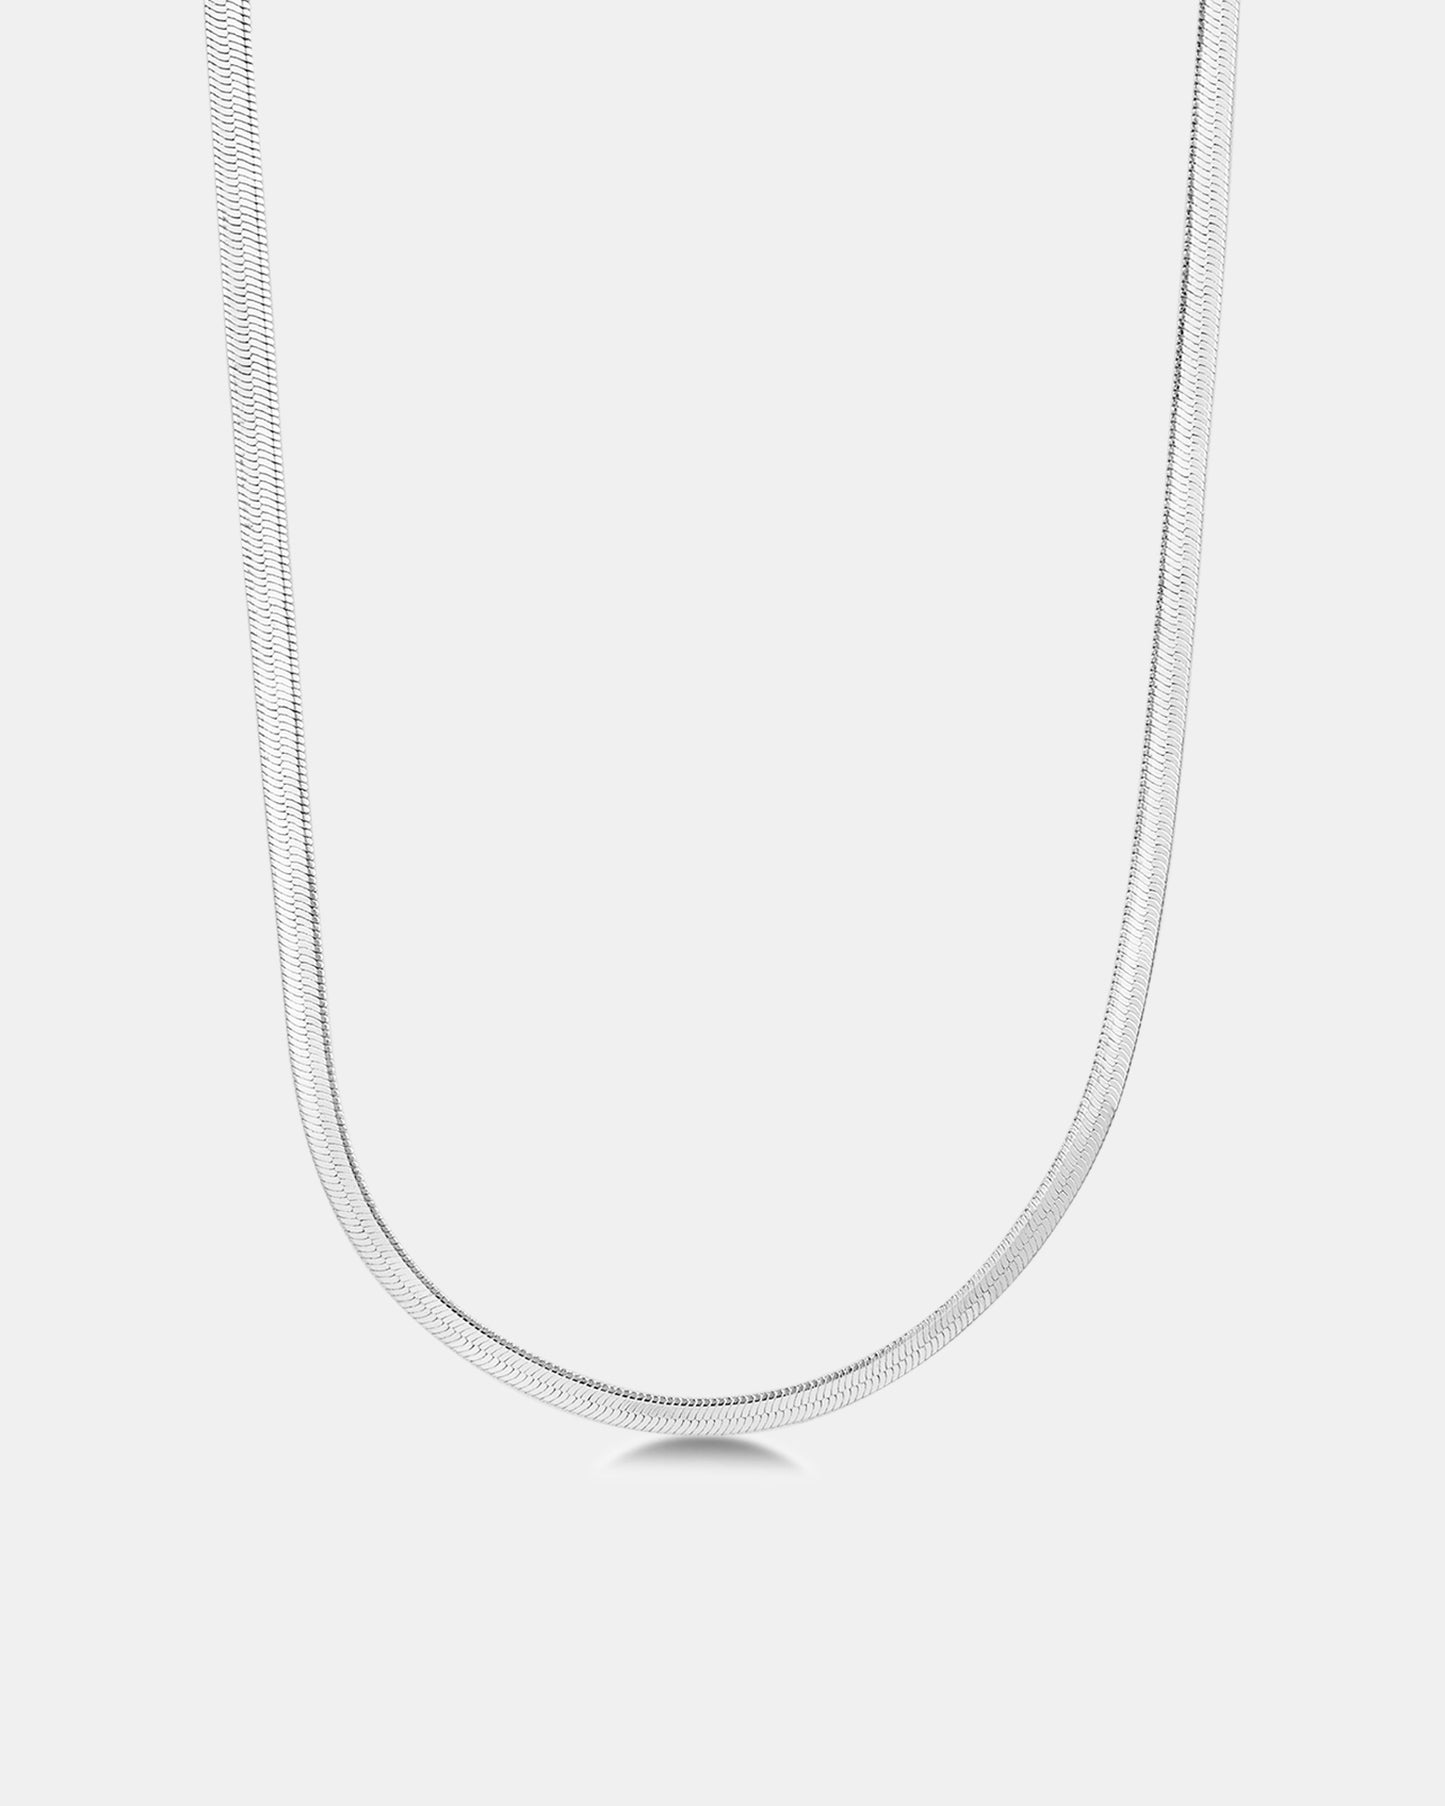 Sleek Snake Chain Necklace